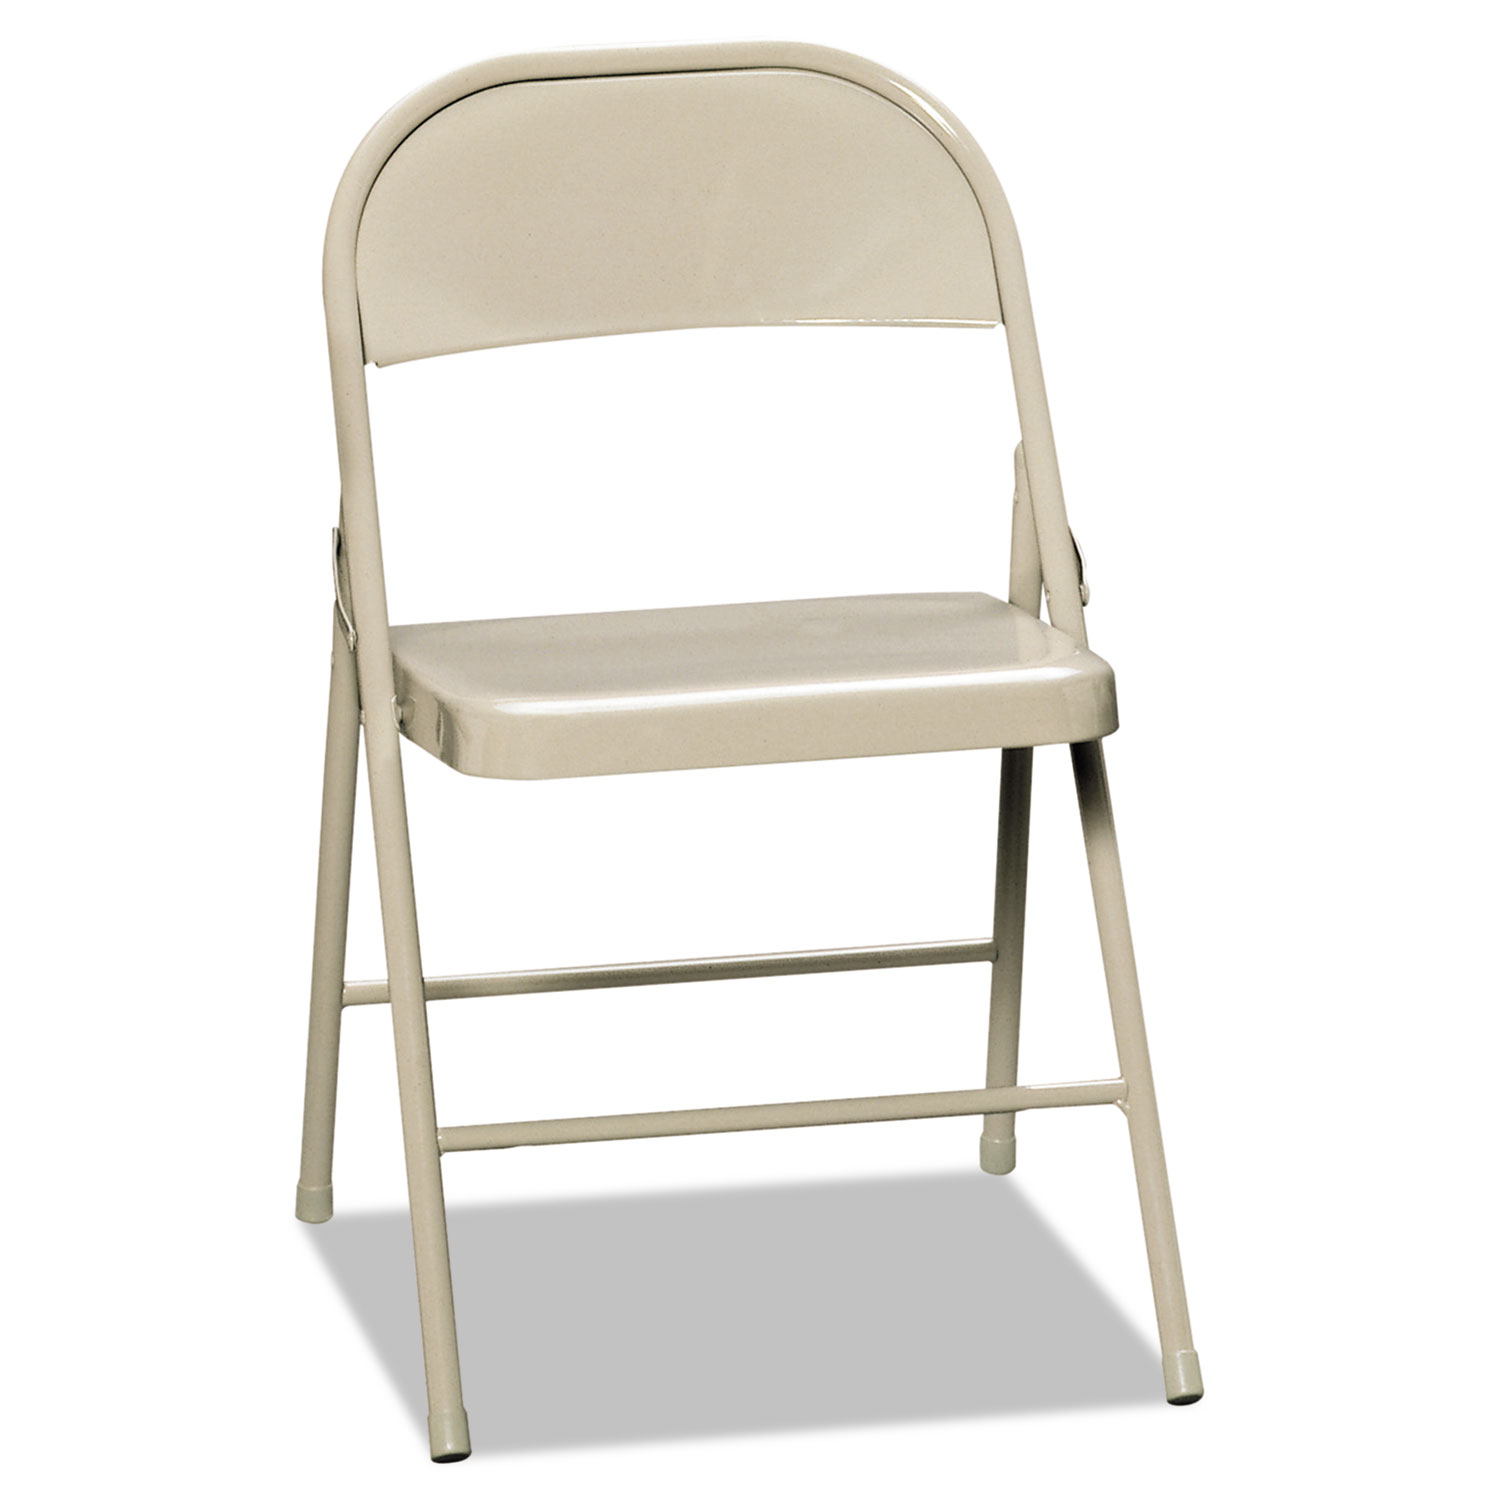 All-Steel Folding Chairs, Light Beige, 4/Carton